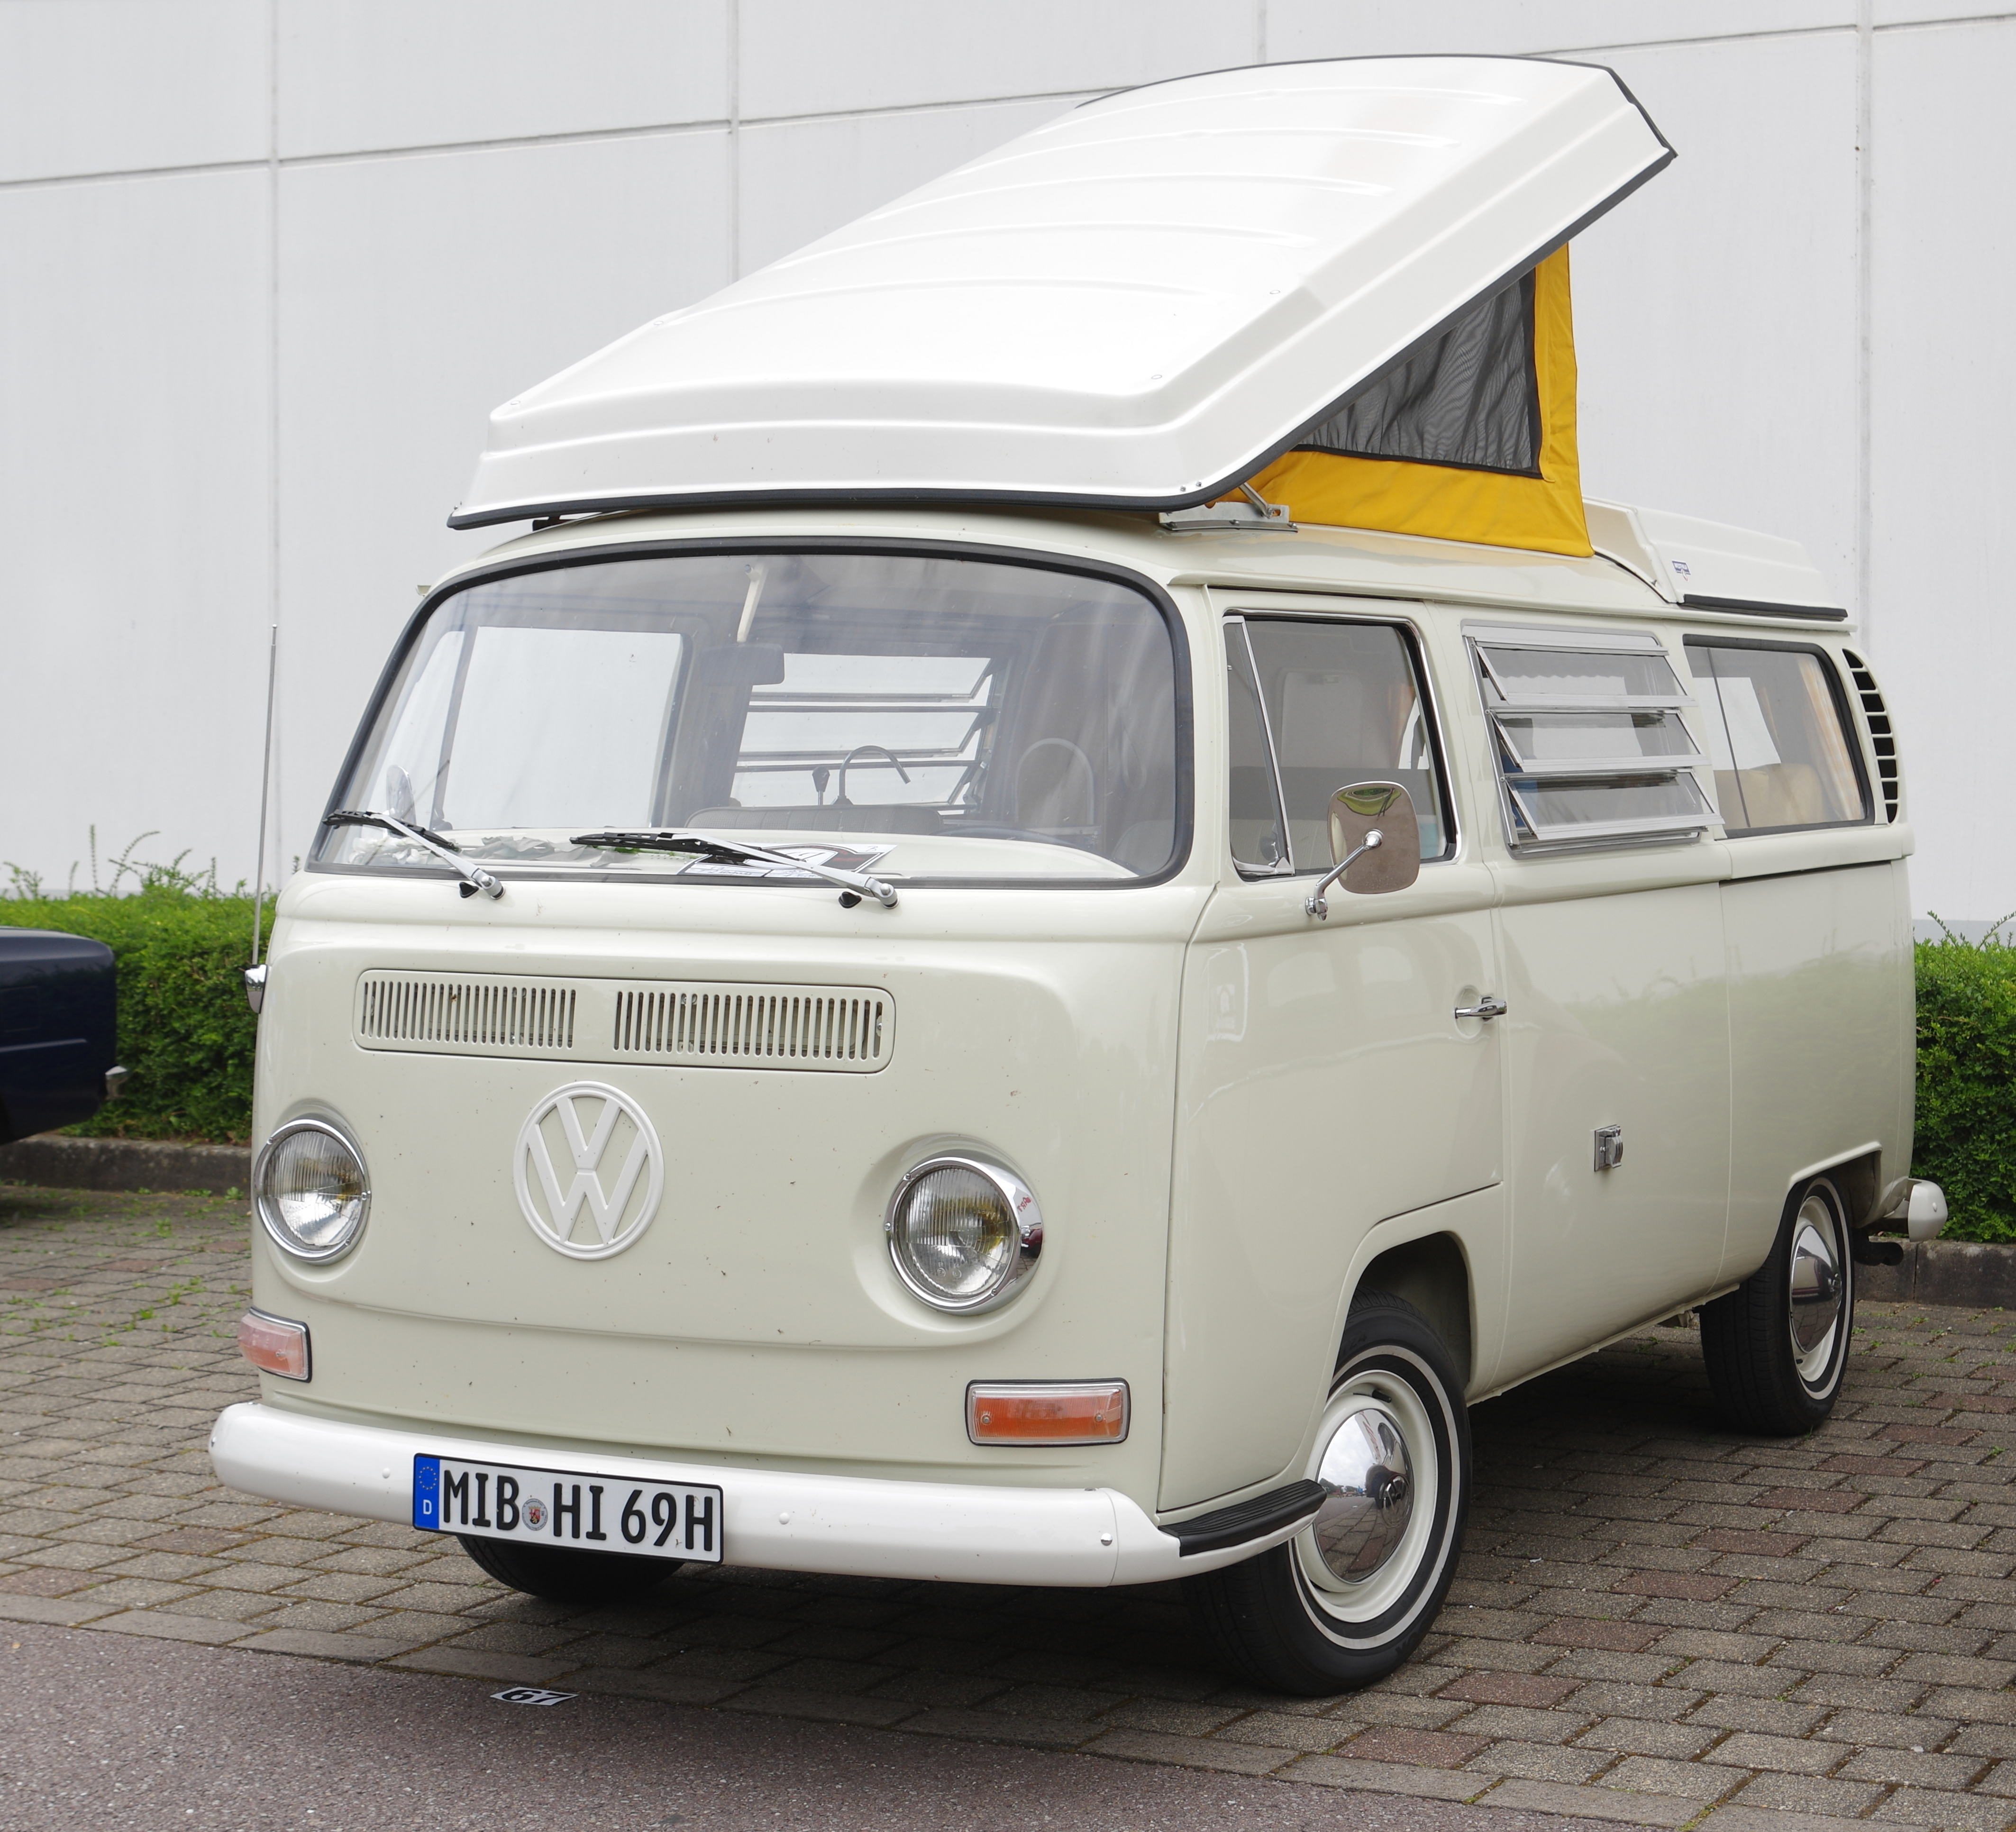 File:Volkswagen Westfalia 2016-07-17 13-29-55.jpg - Wikimedia Commons